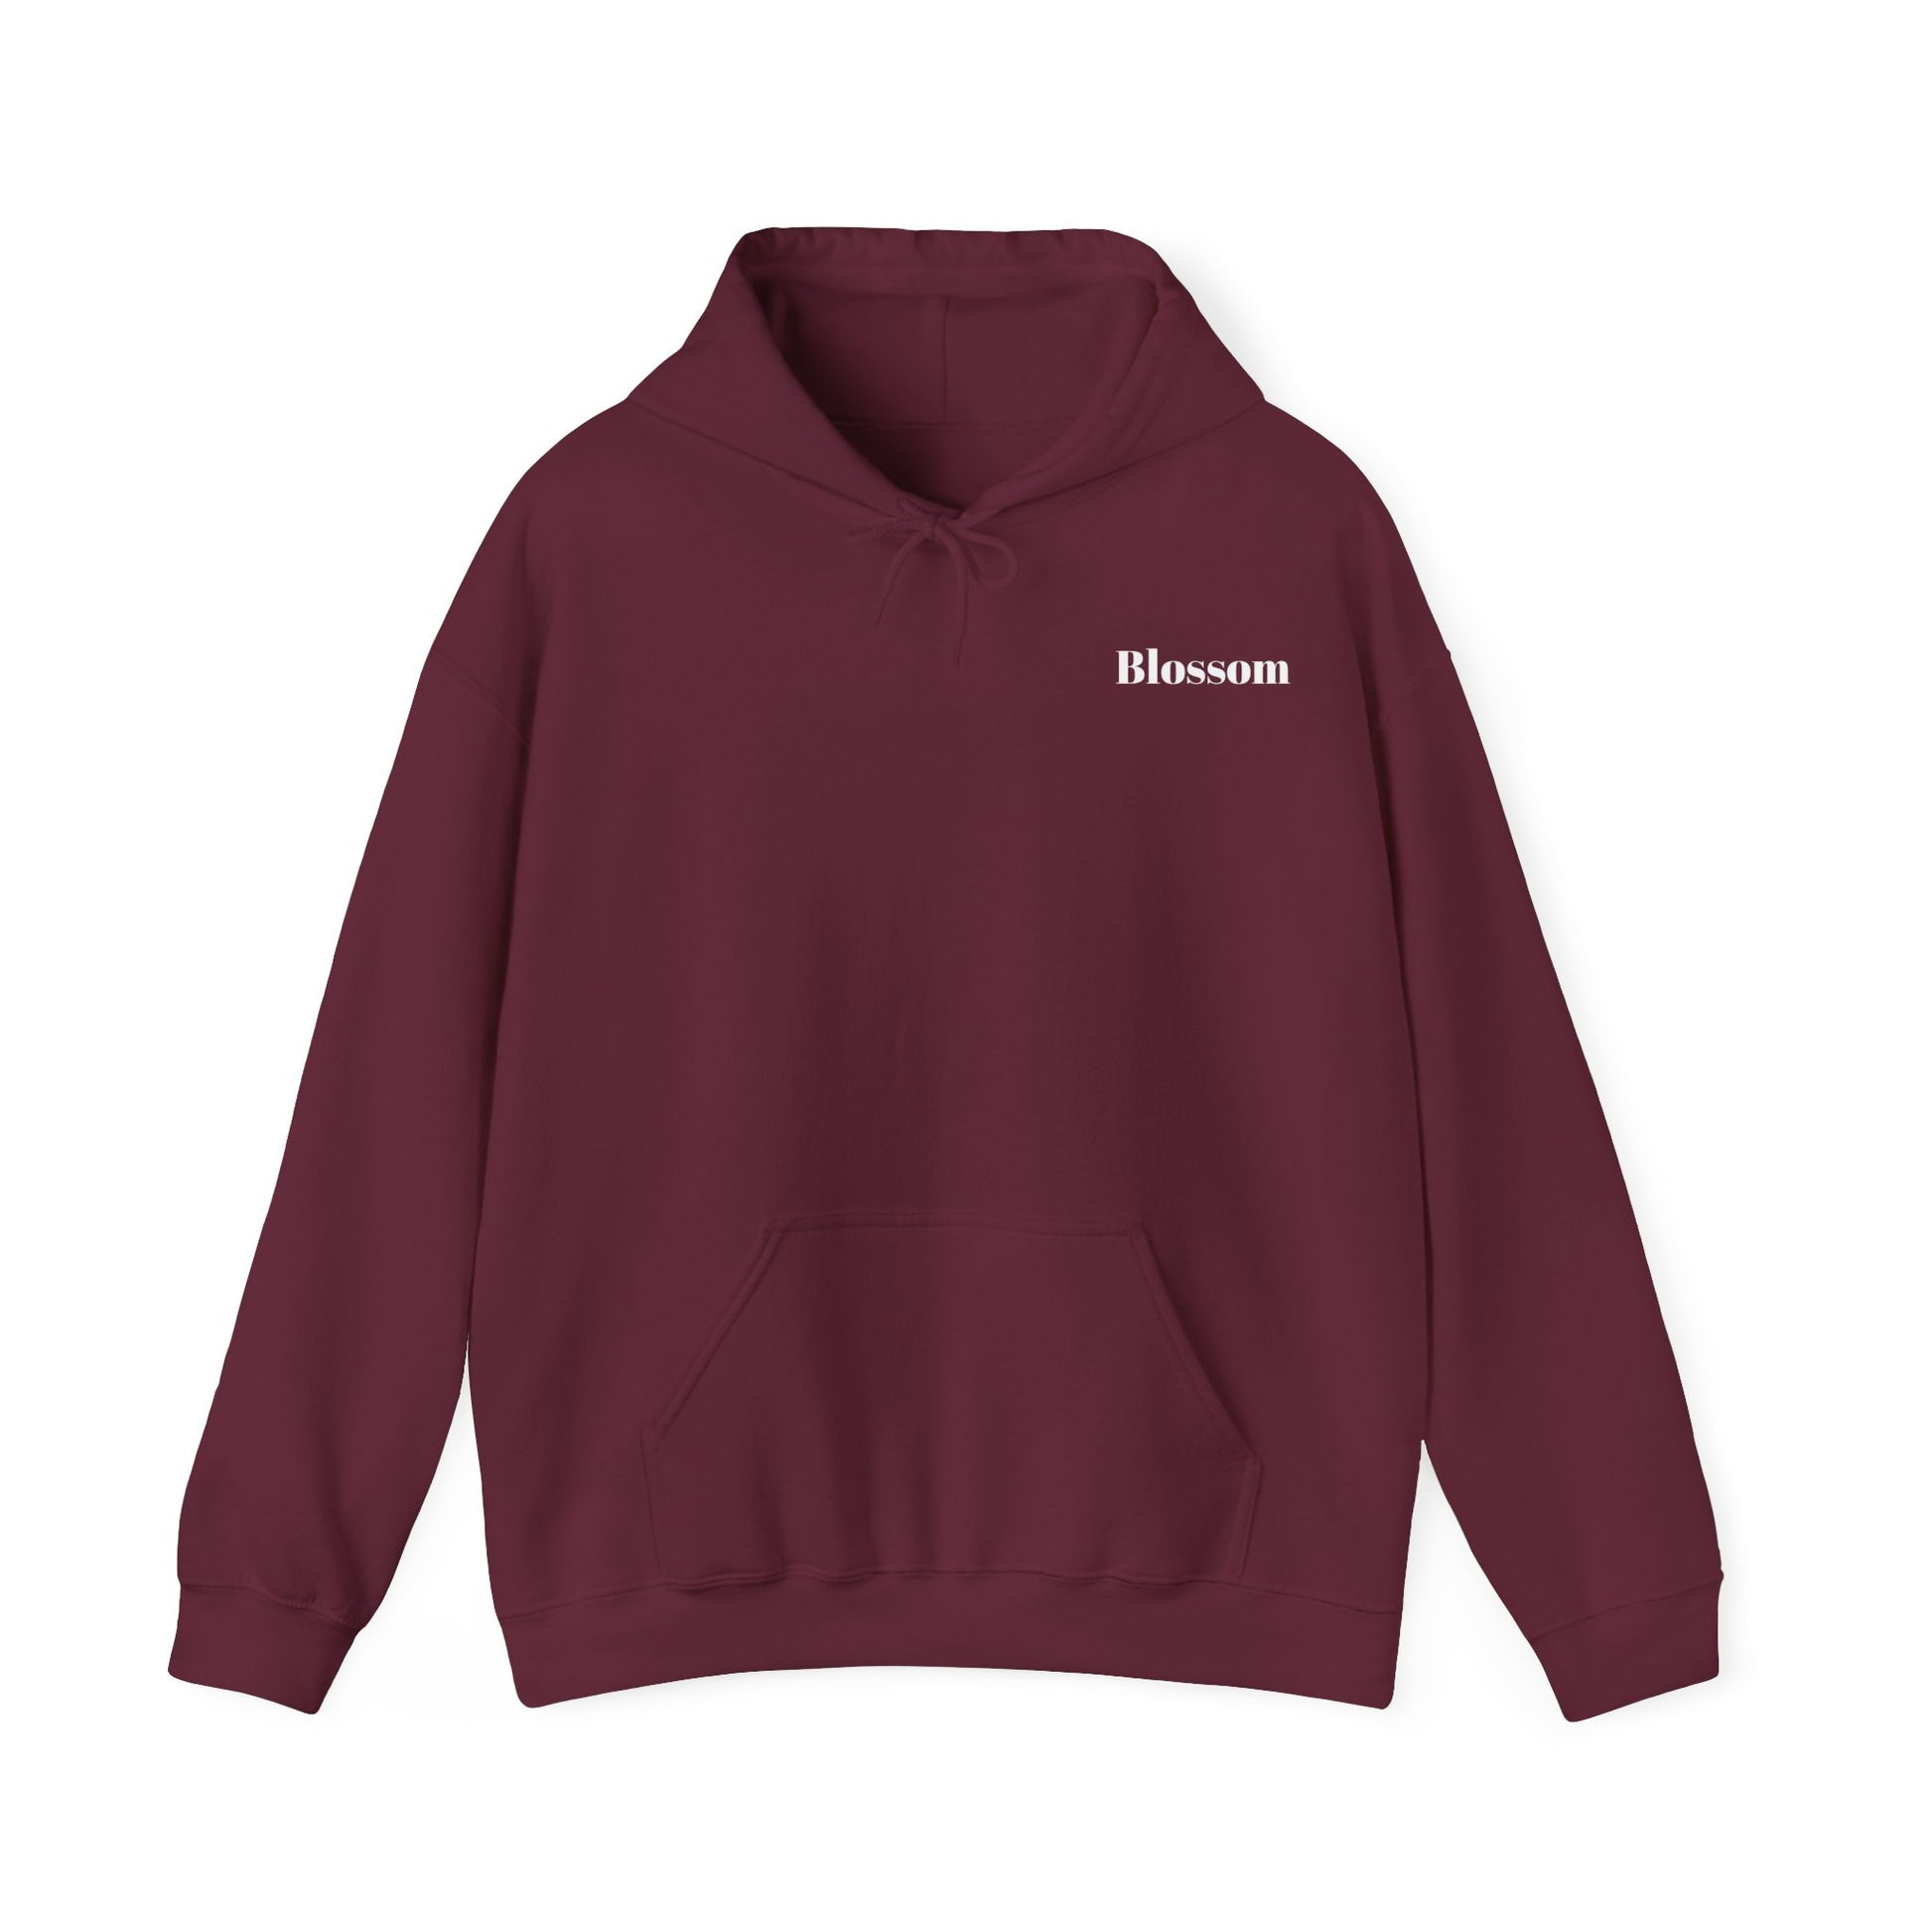 Blossom Unisex Hooded Sweatshirt with Heavy Blend Fabric9